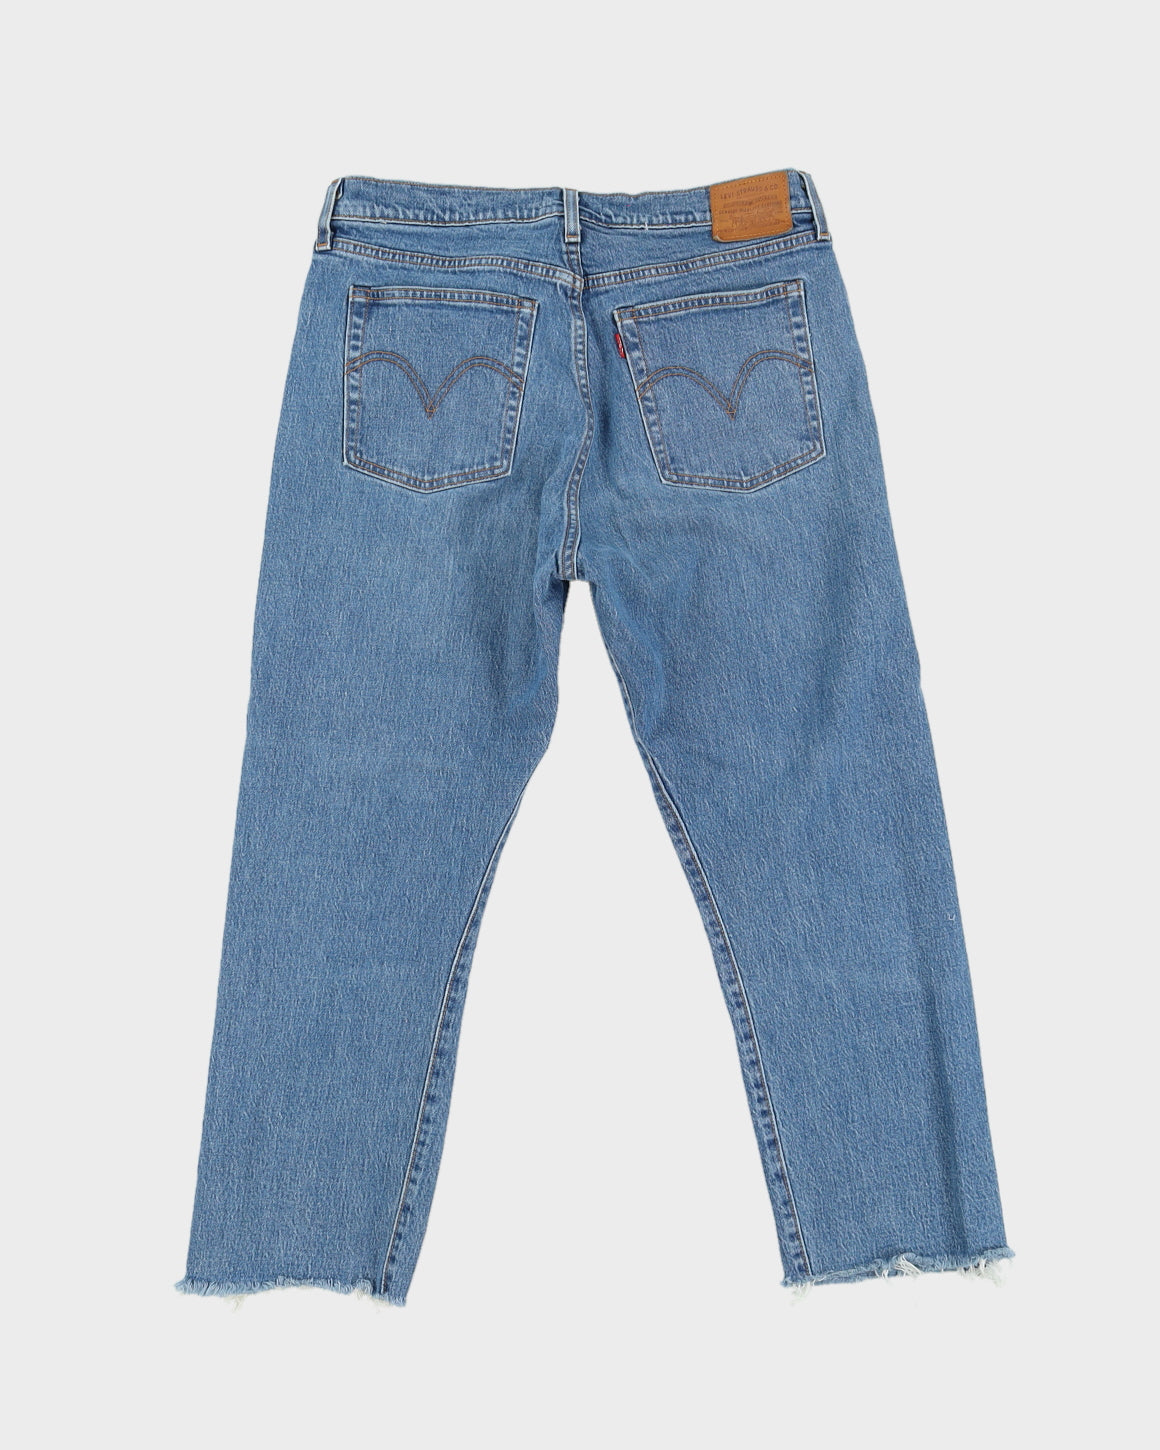 Levi's Big E Repro Blue Jeans - W32 L25